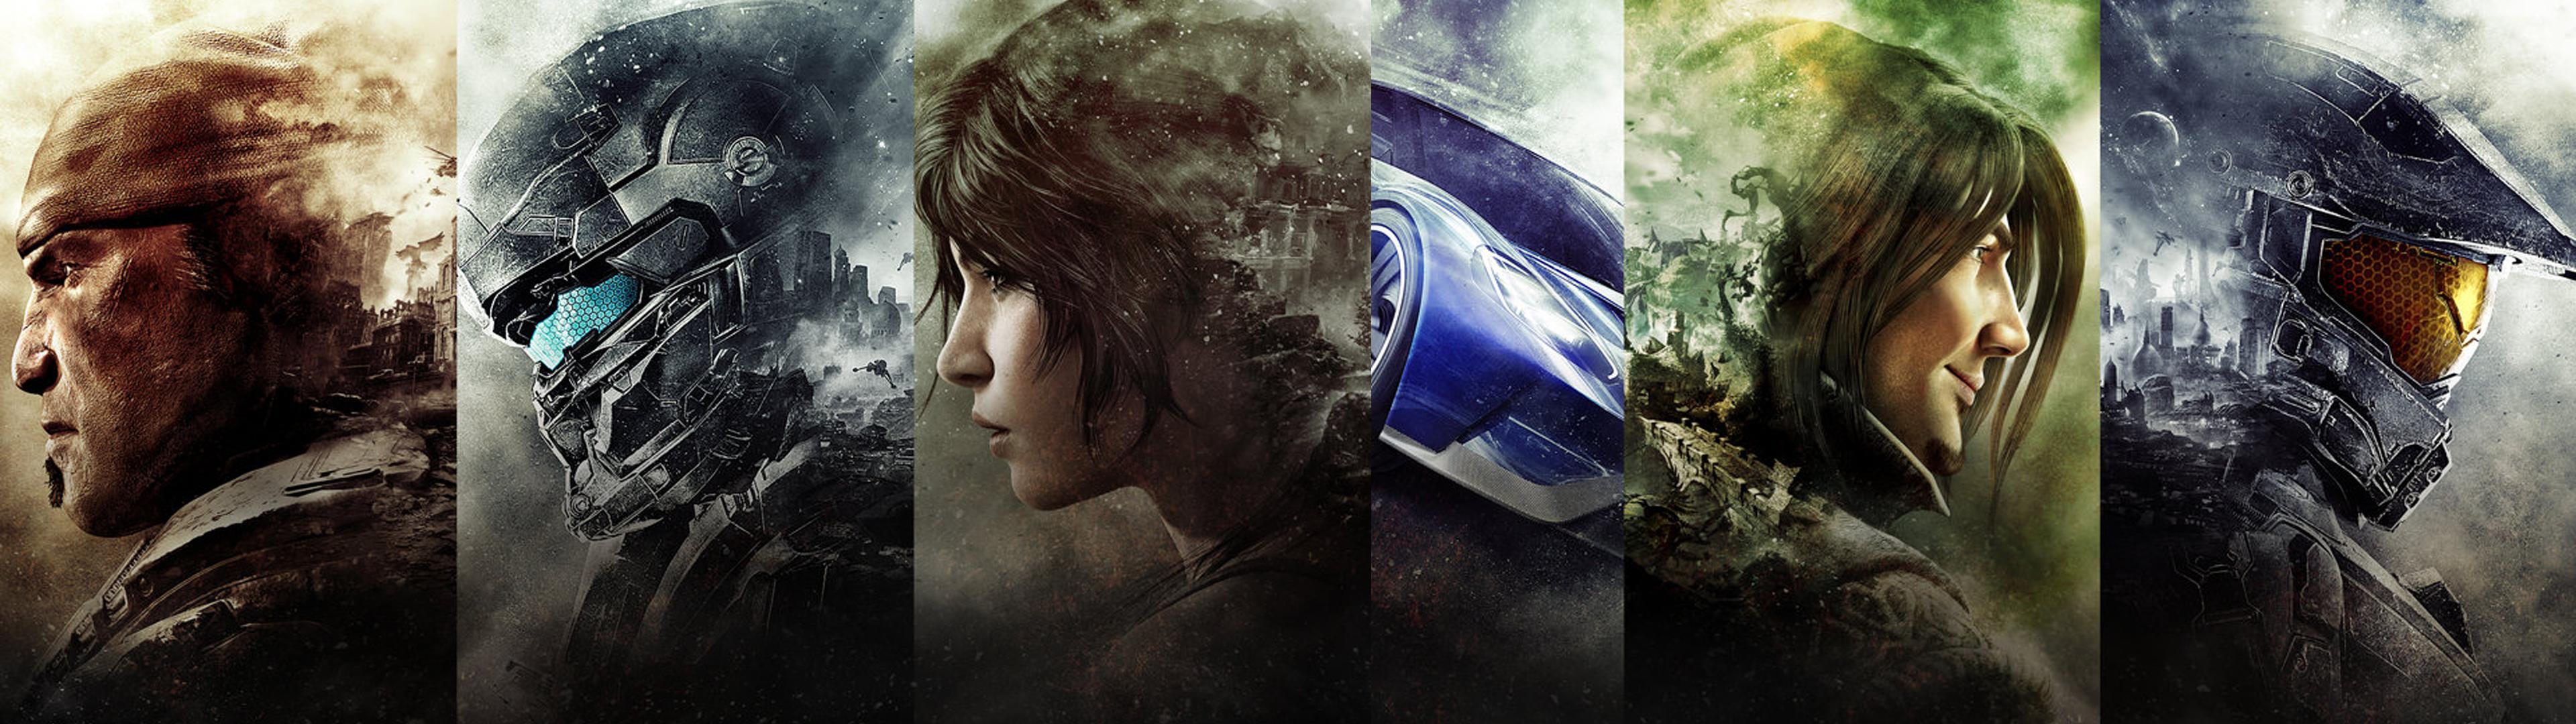 Dual screen wallpaper of Xbox E3 posters